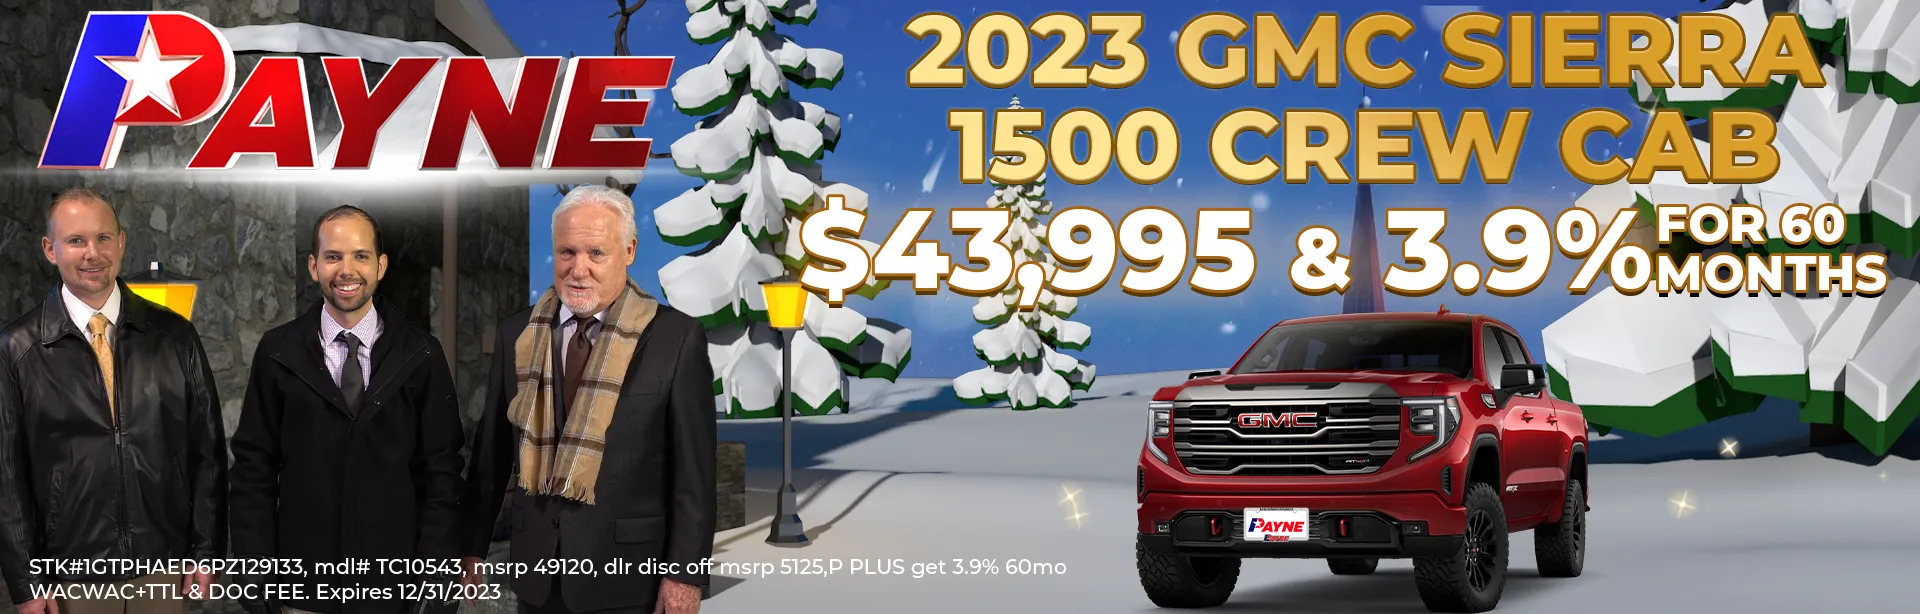 2023 GMC Sierra 1500 Crew Cab $43,995 & 3.9% for 60 Months | Payne Chevrolet Buick GMC | Weslaco, TX